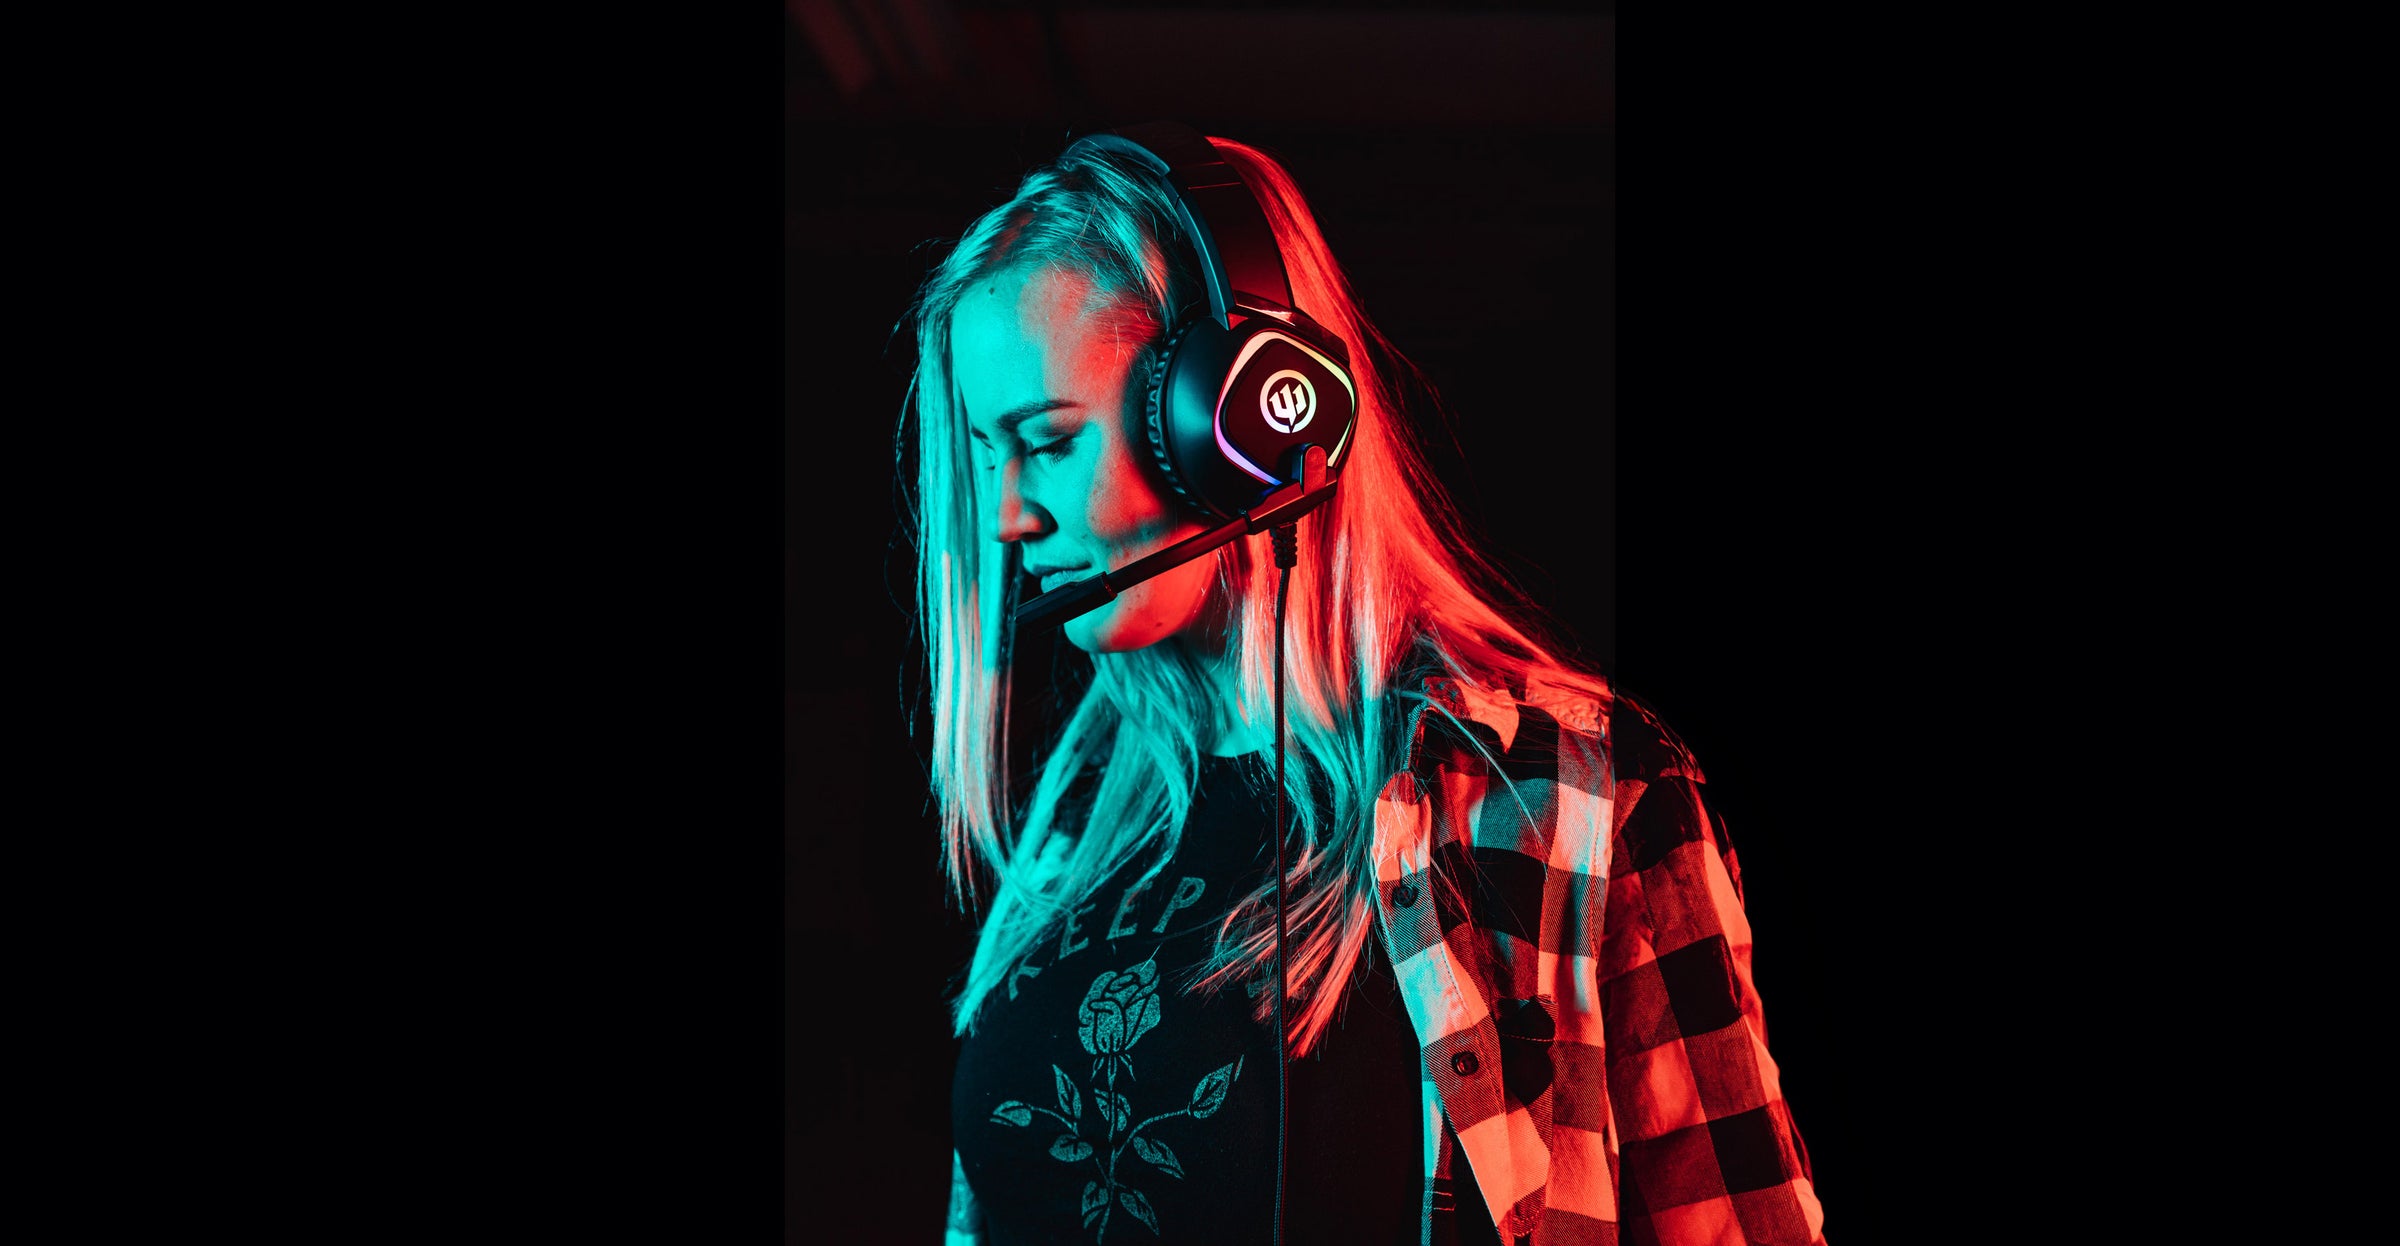 Woman wearing gaming headphone on black background